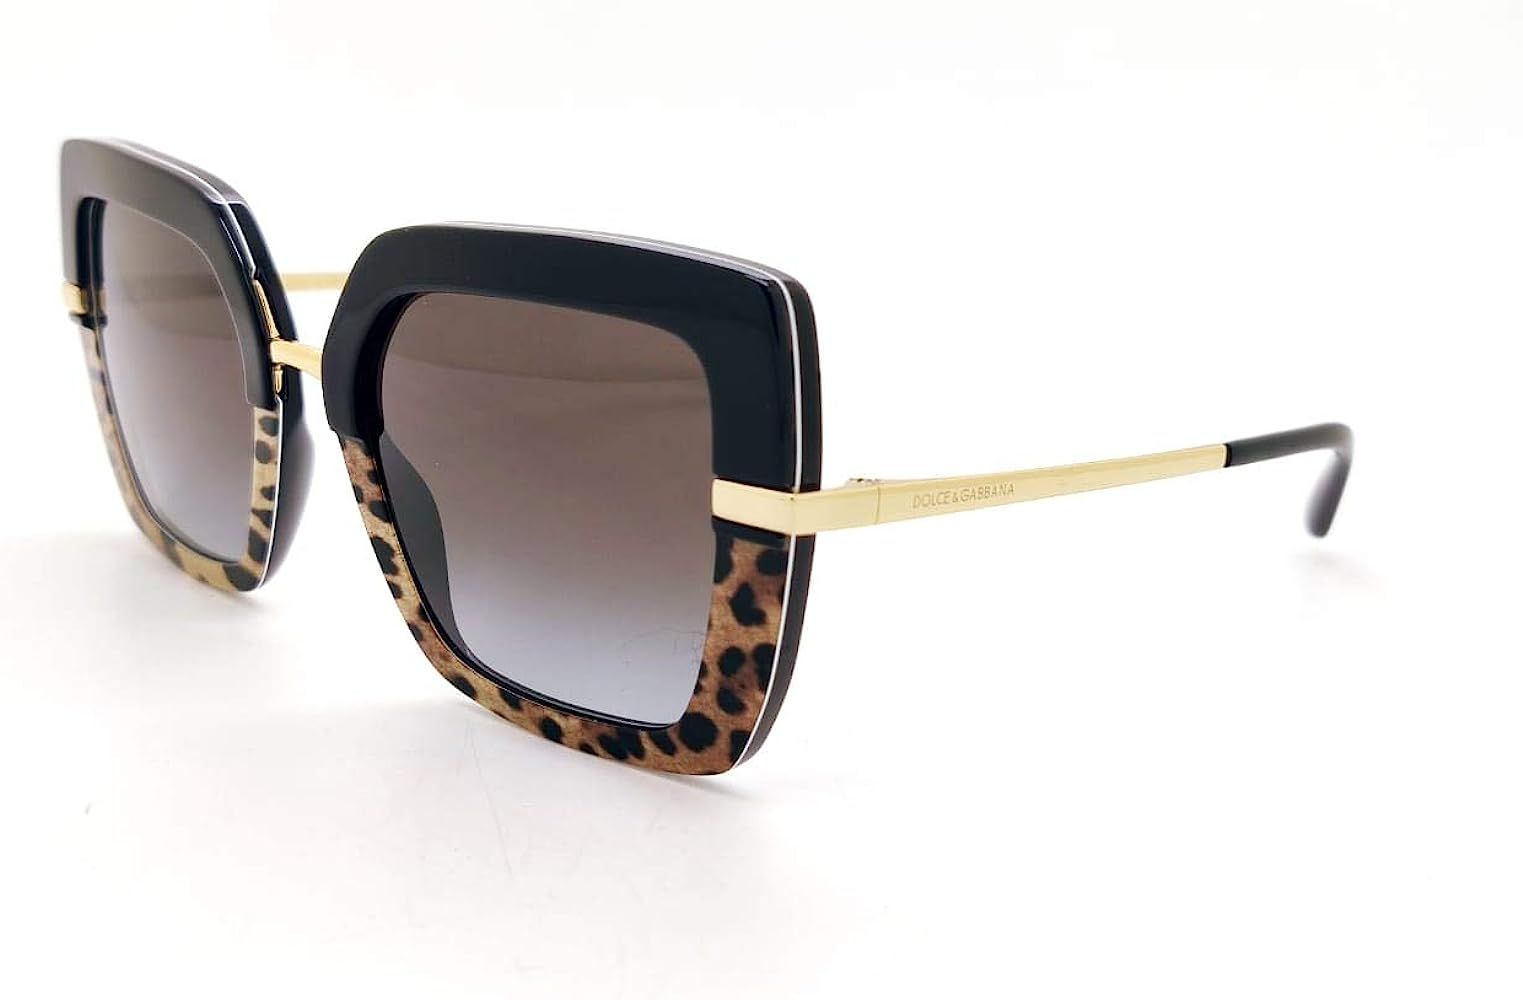 Sunglasses Dolce & Gabbana DG 4373 32448G Top Black On Print Leo/Black | Amazon (US)